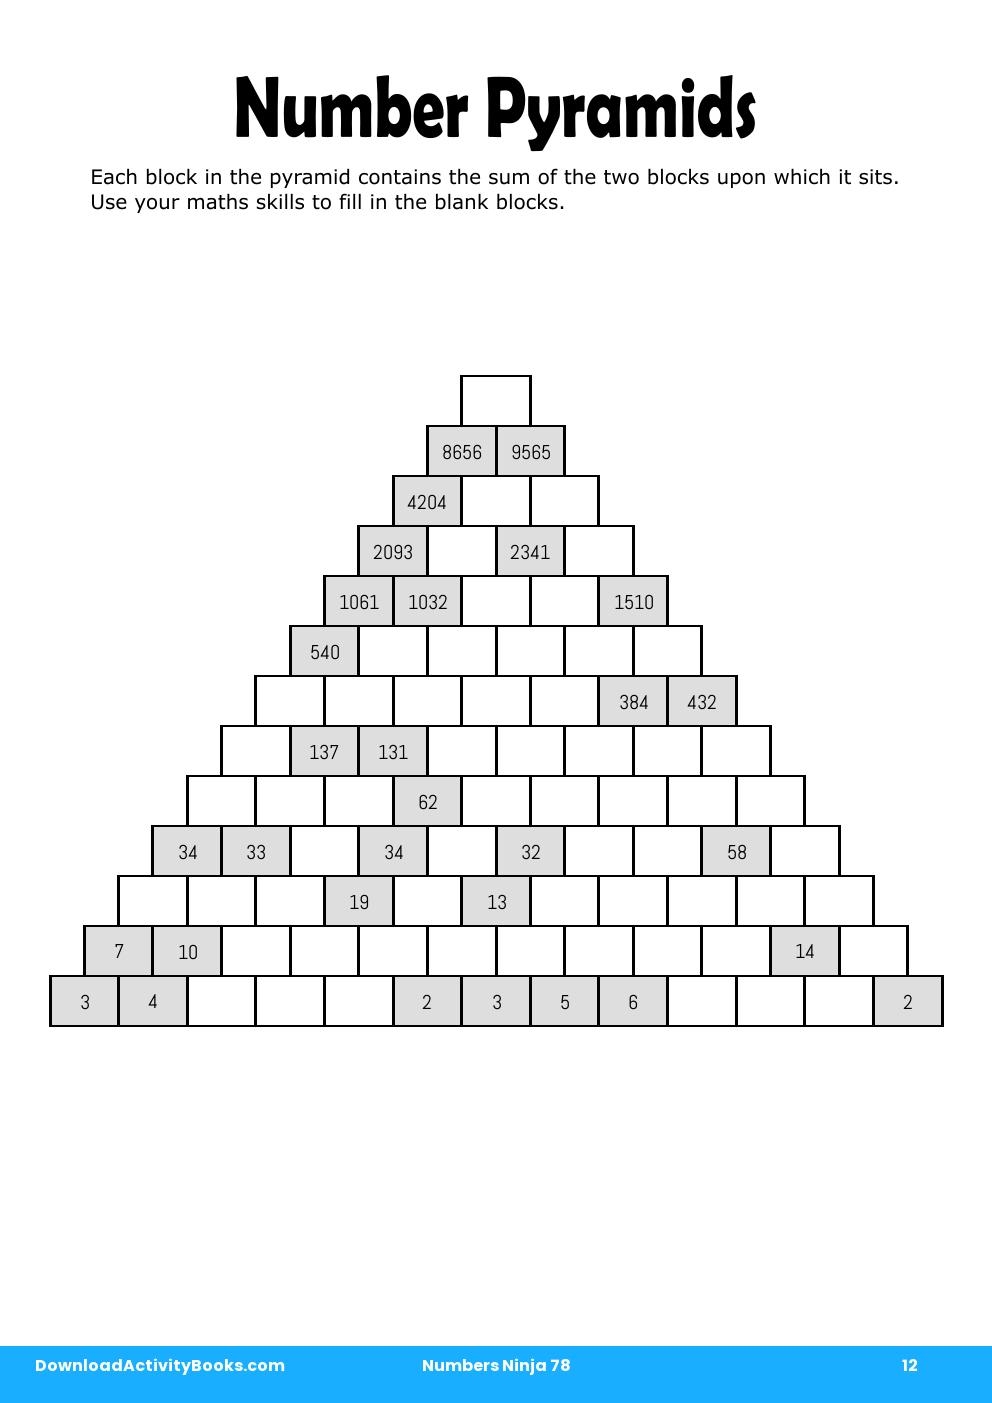 Number Pyramids in Numbers Ninja 78